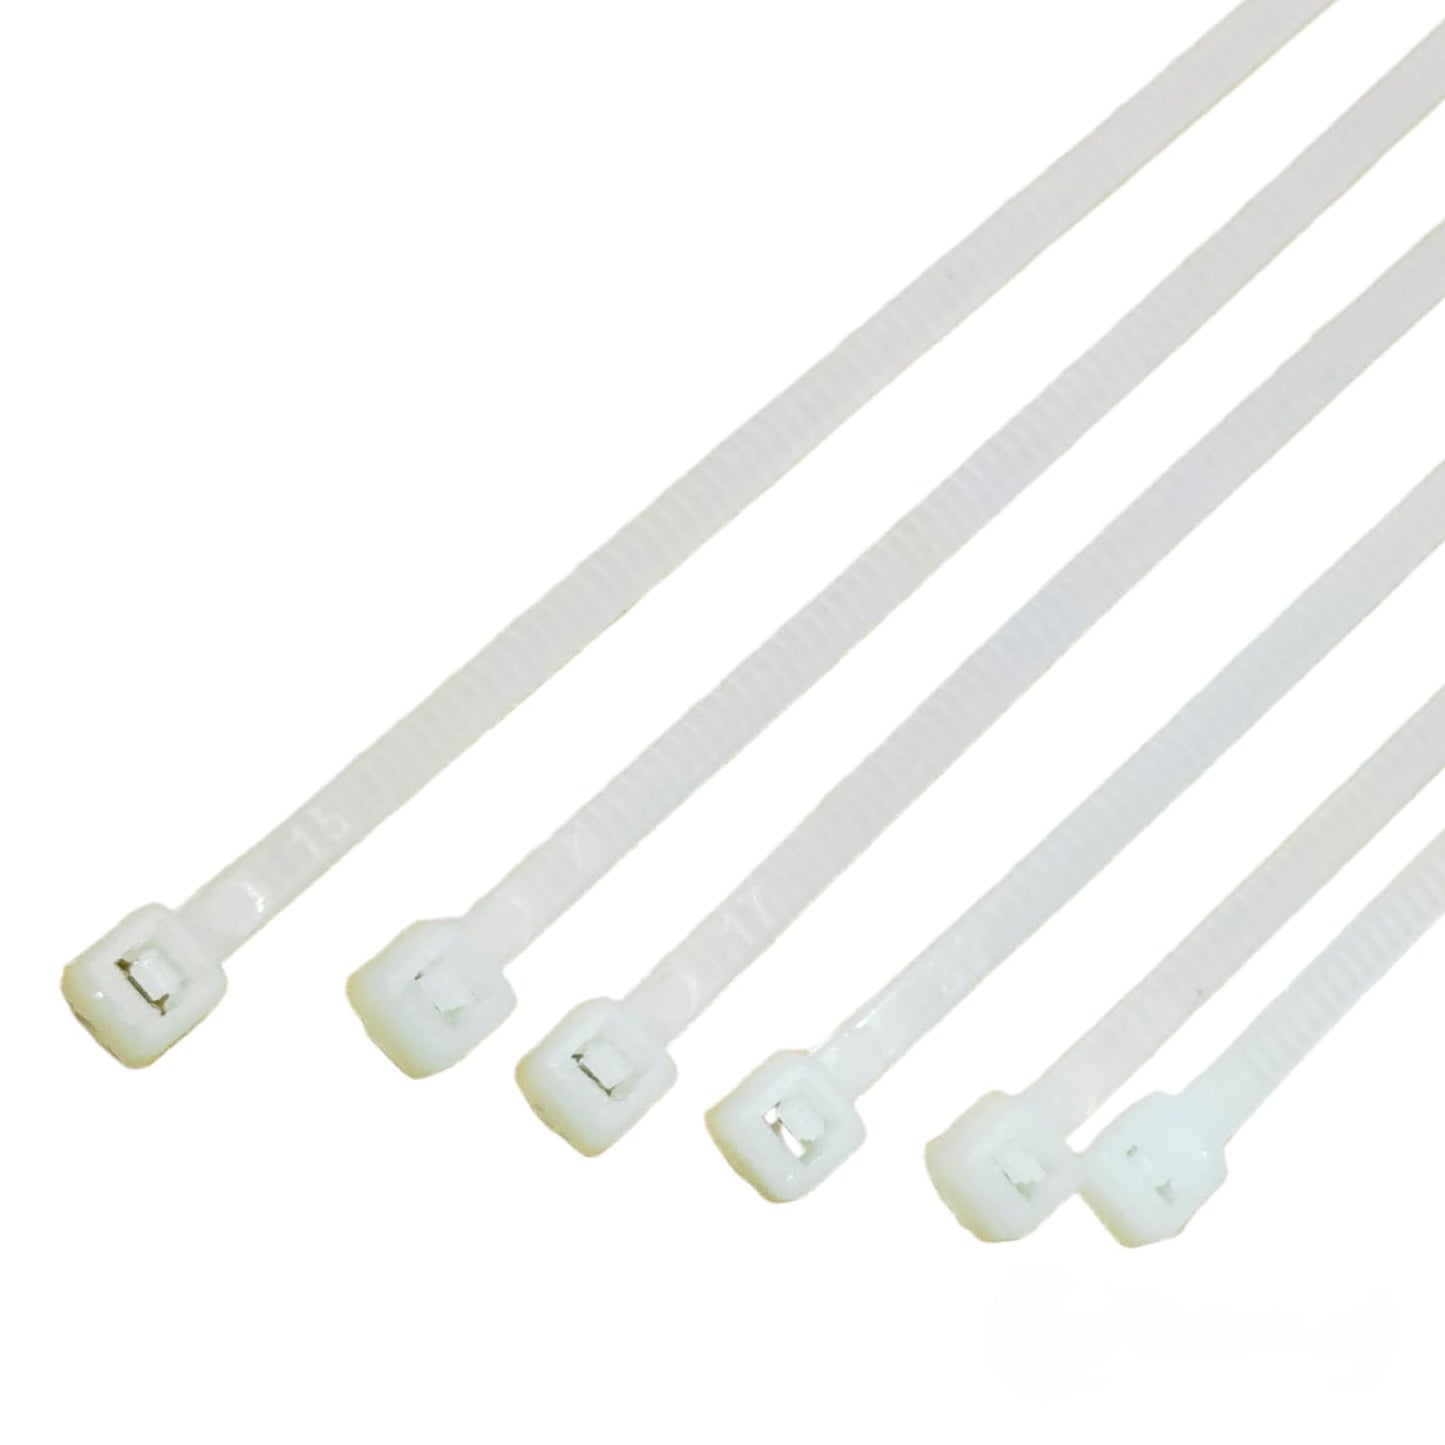 6 inch ZIP Tie pack of 10 | Self Locking Cable (Buy 50 & Get 5 Free)